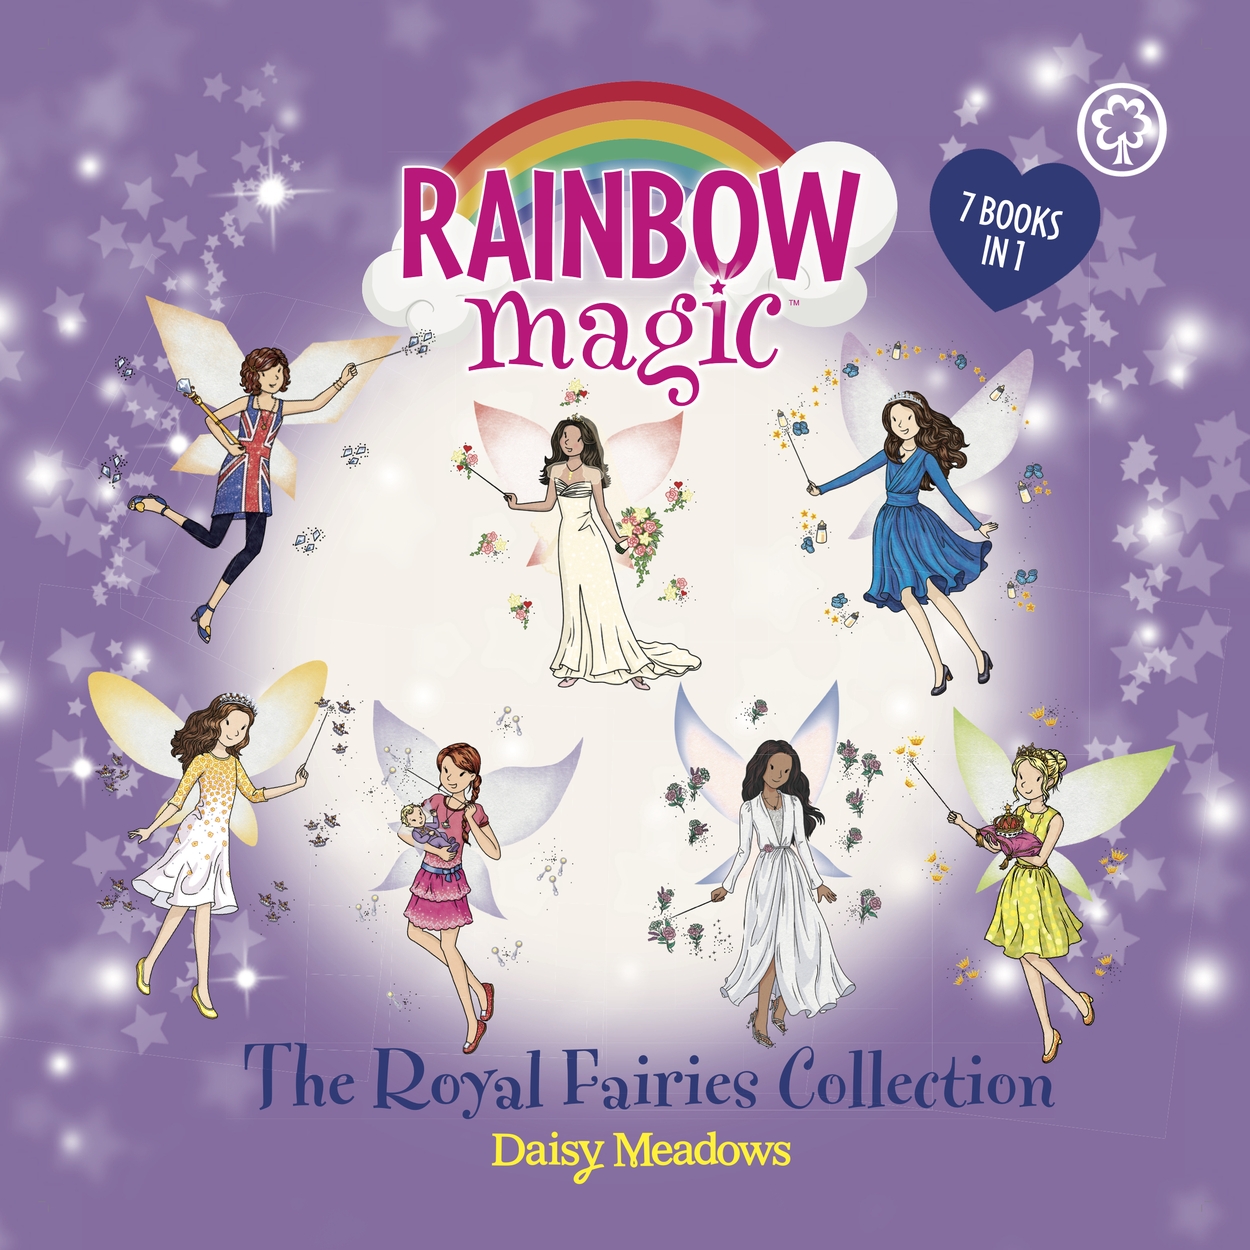 Rainbow Magic: The Royal Fairies Collection by Daisy Meadows | Hachette UK